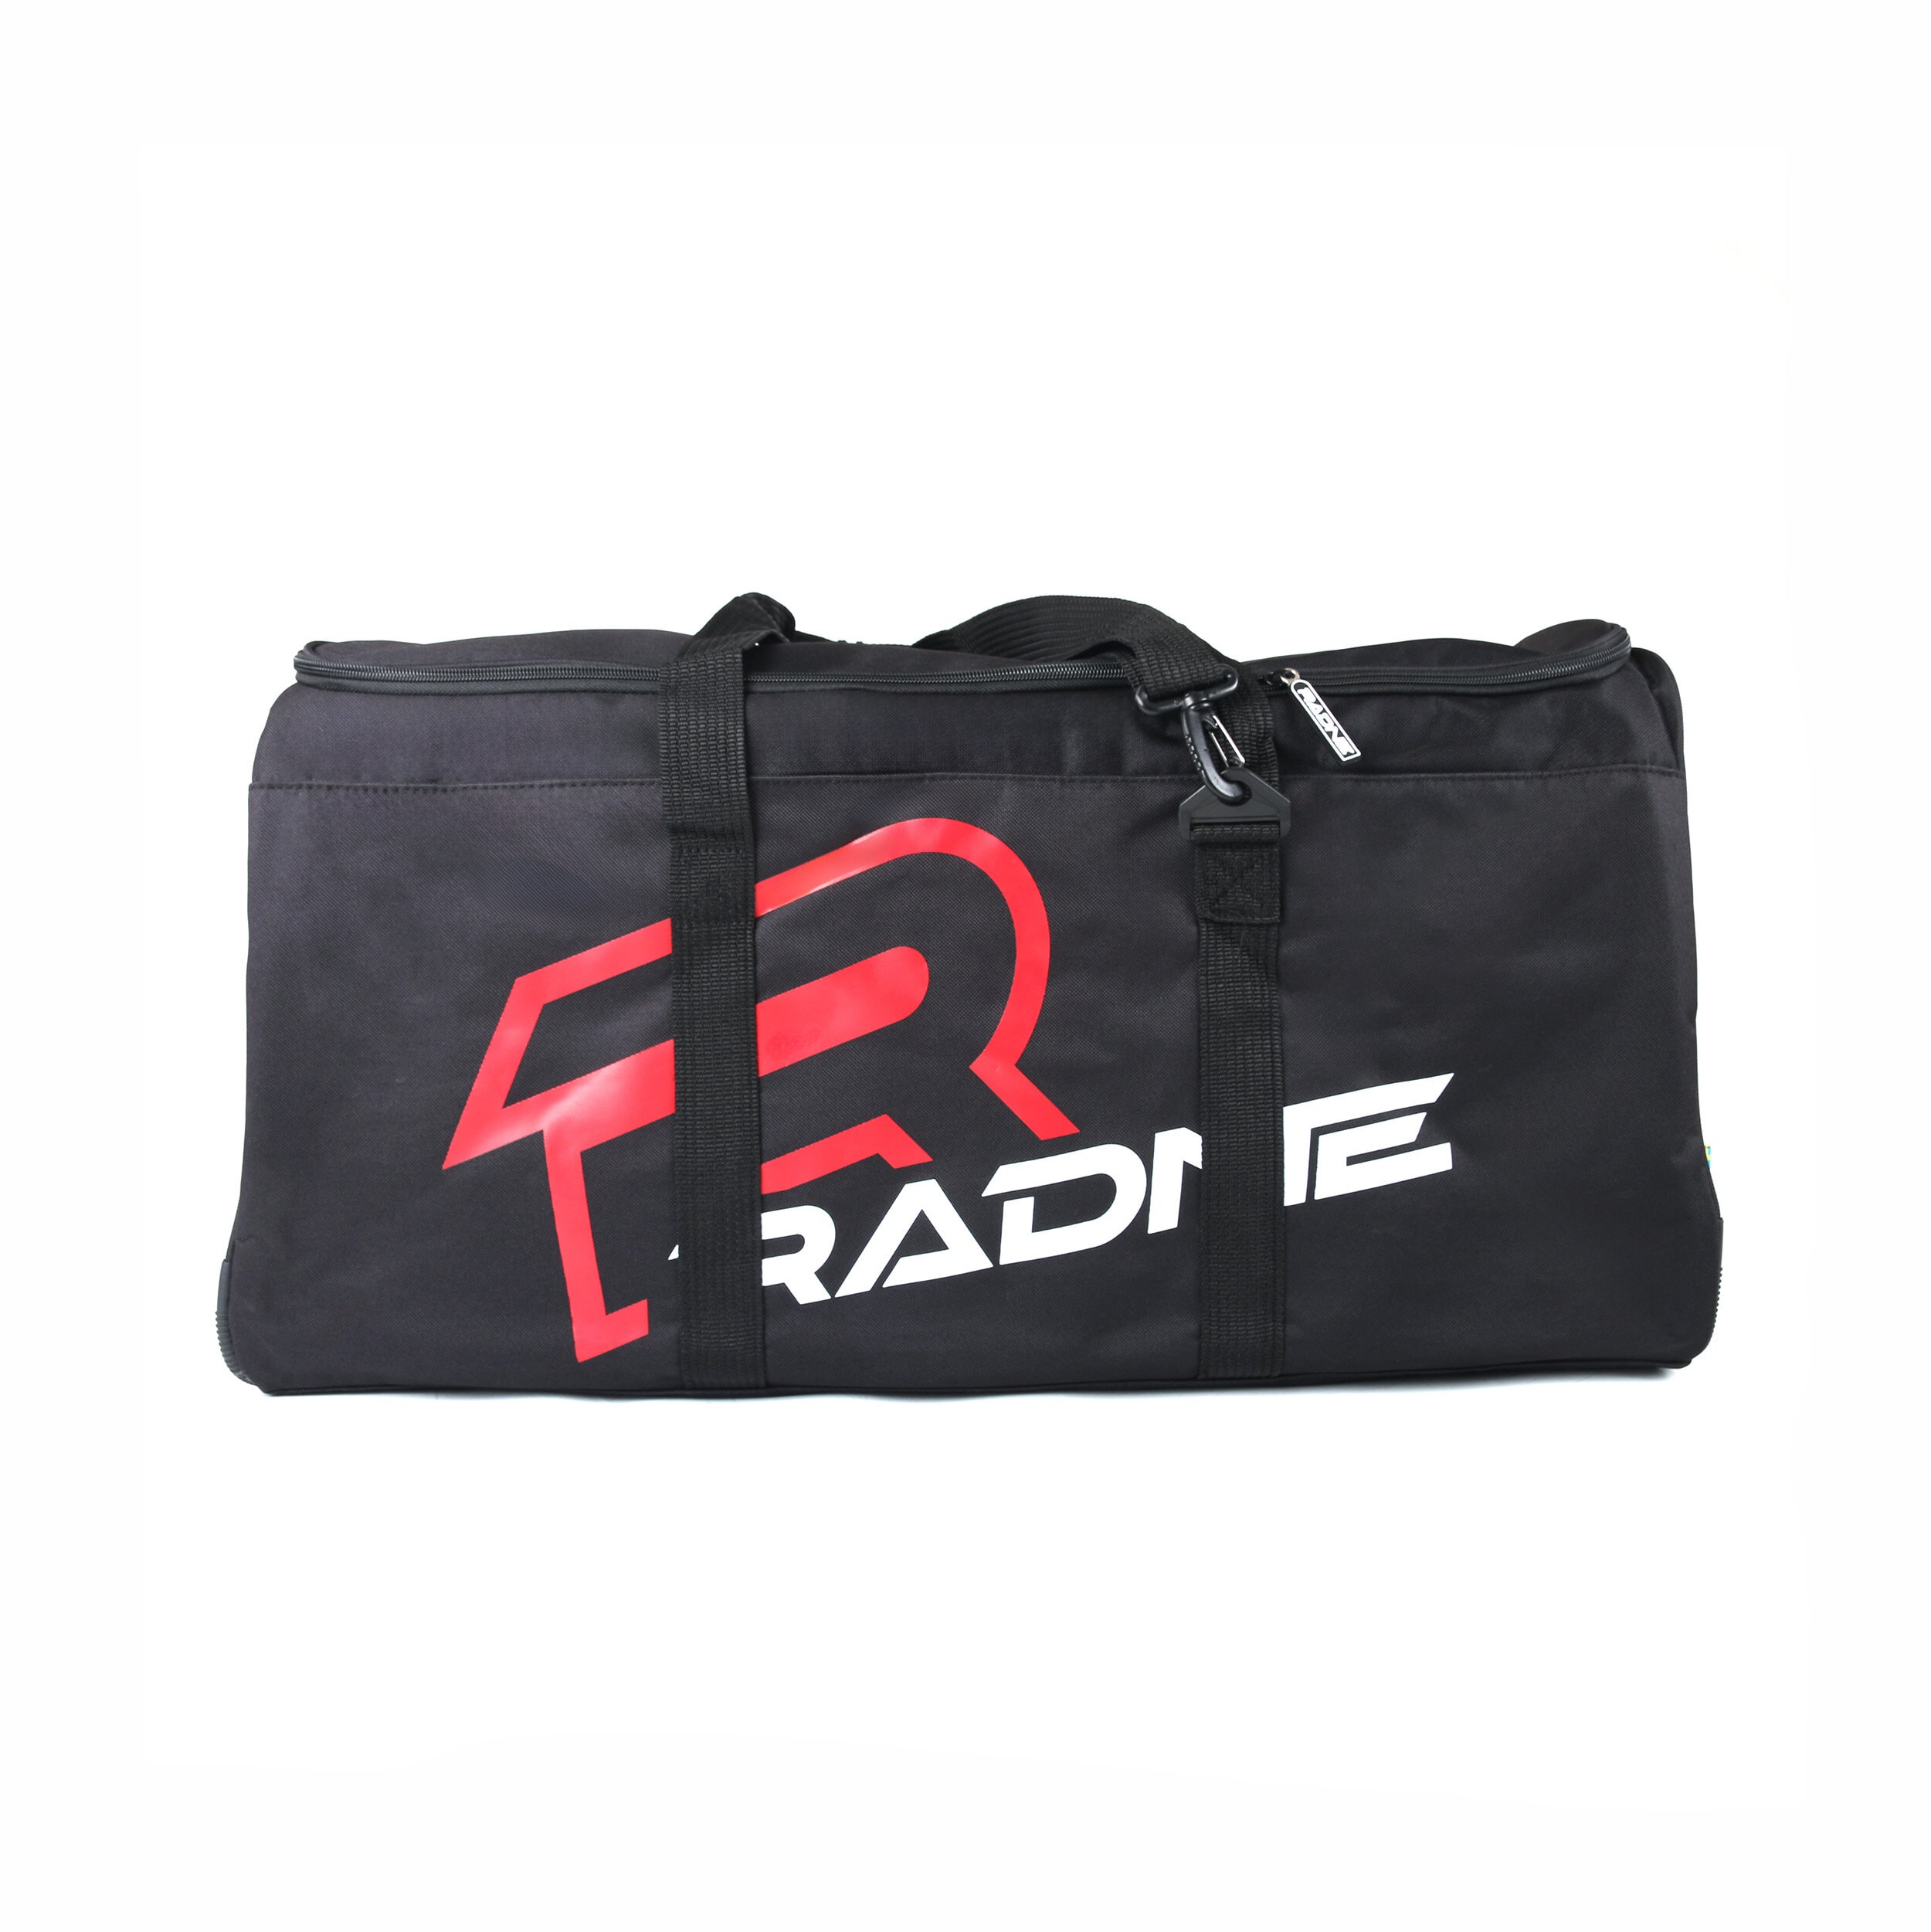 Radne Gear Bag